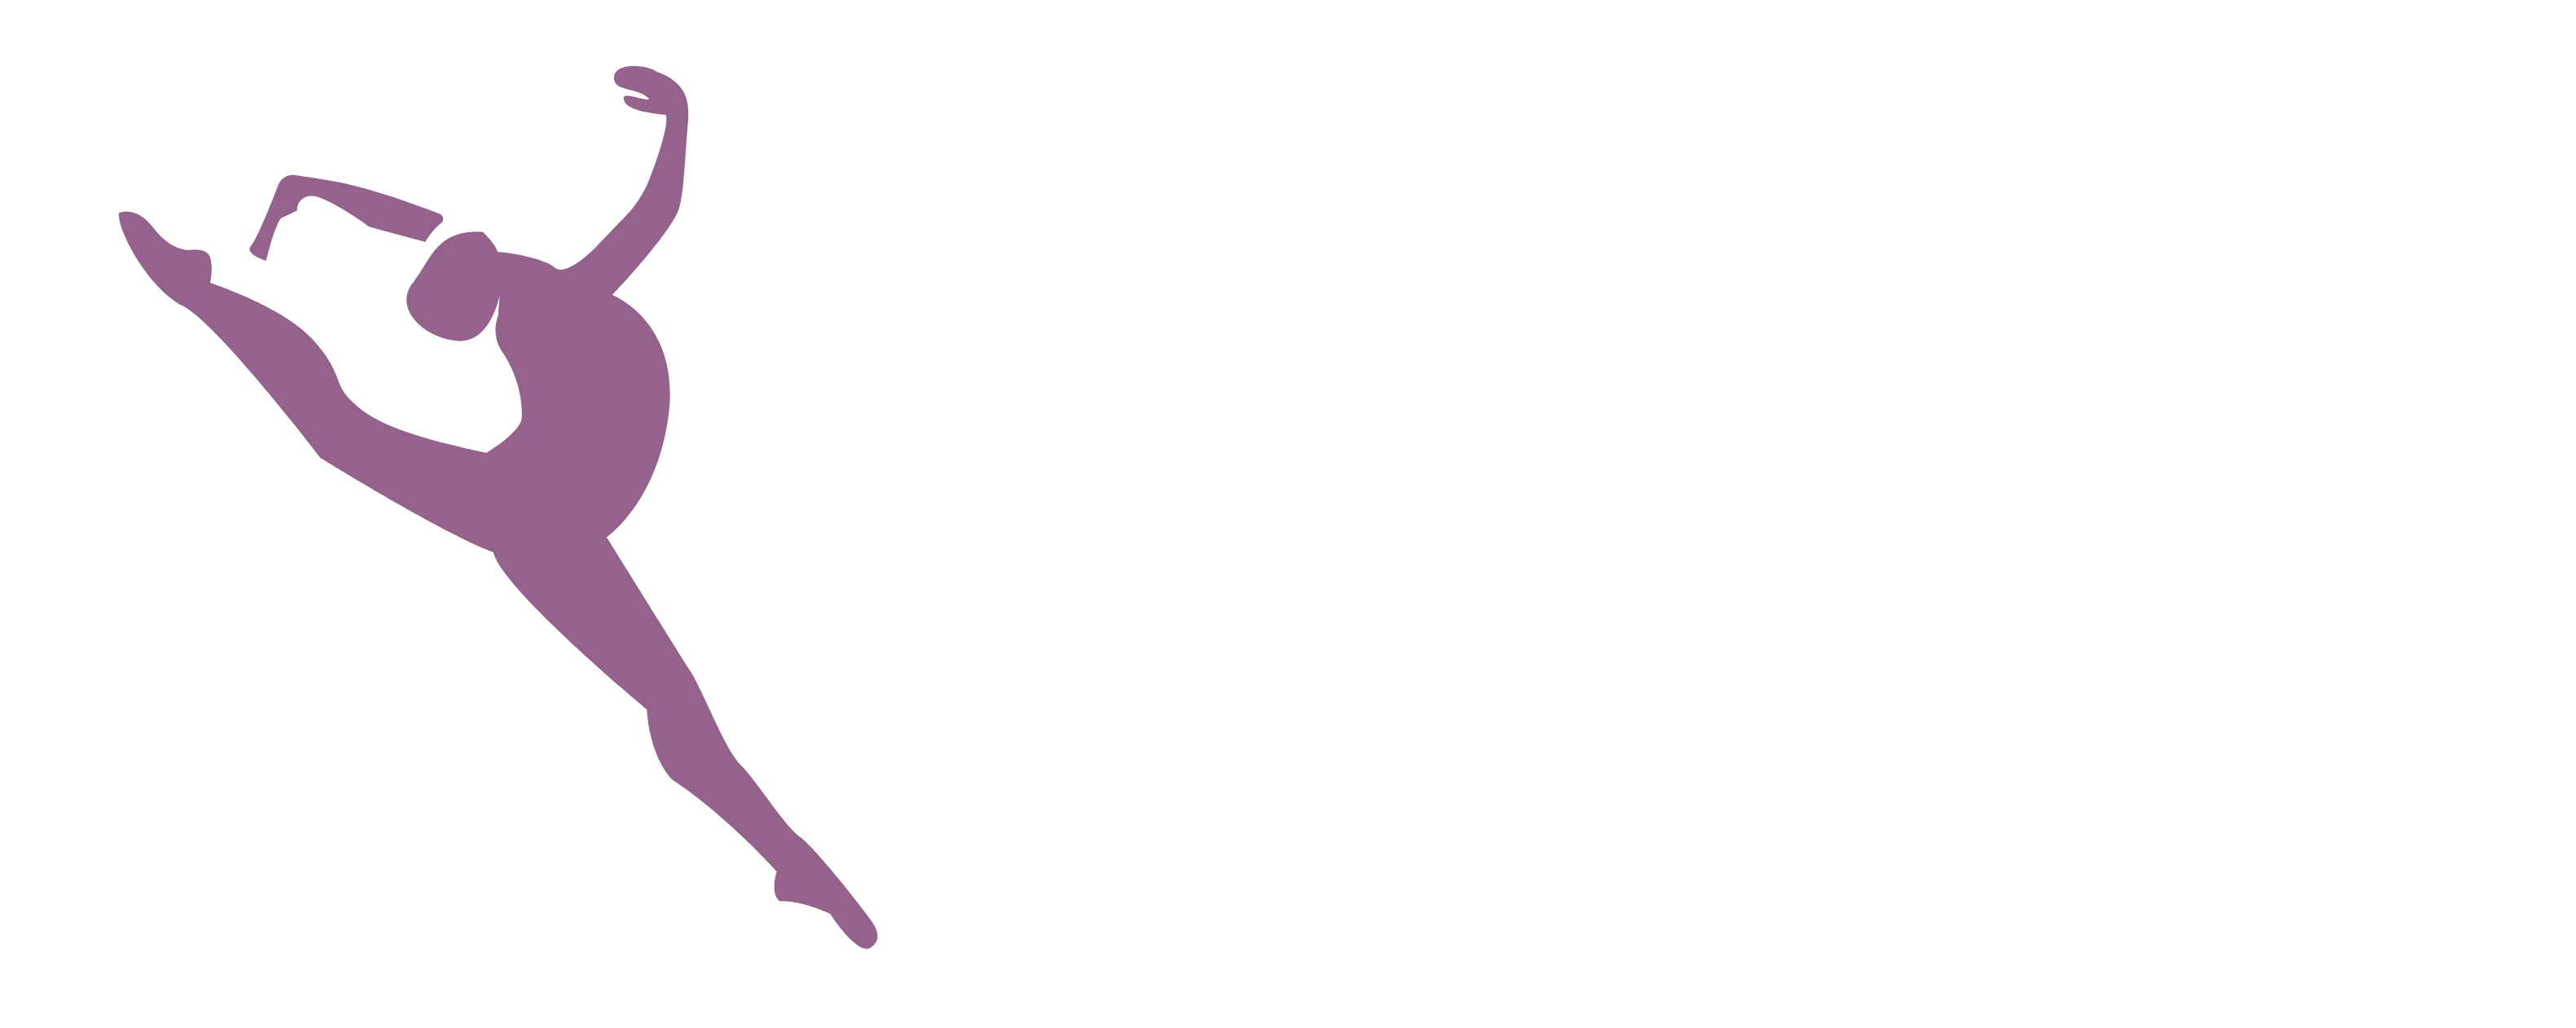 Caroline Lee Dance School